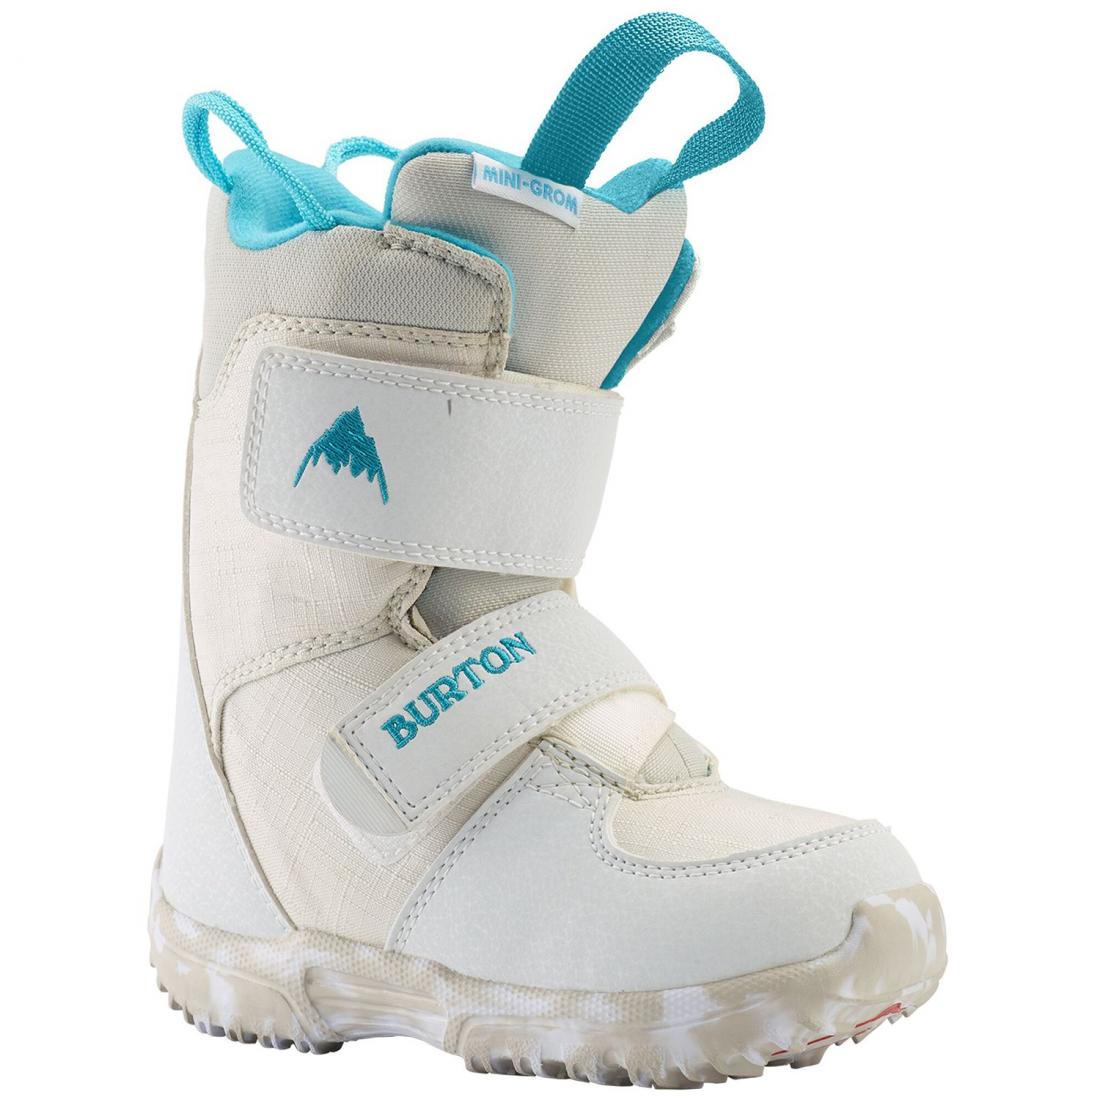 Детские ботинки для сноуборда Burton Mini - Grom